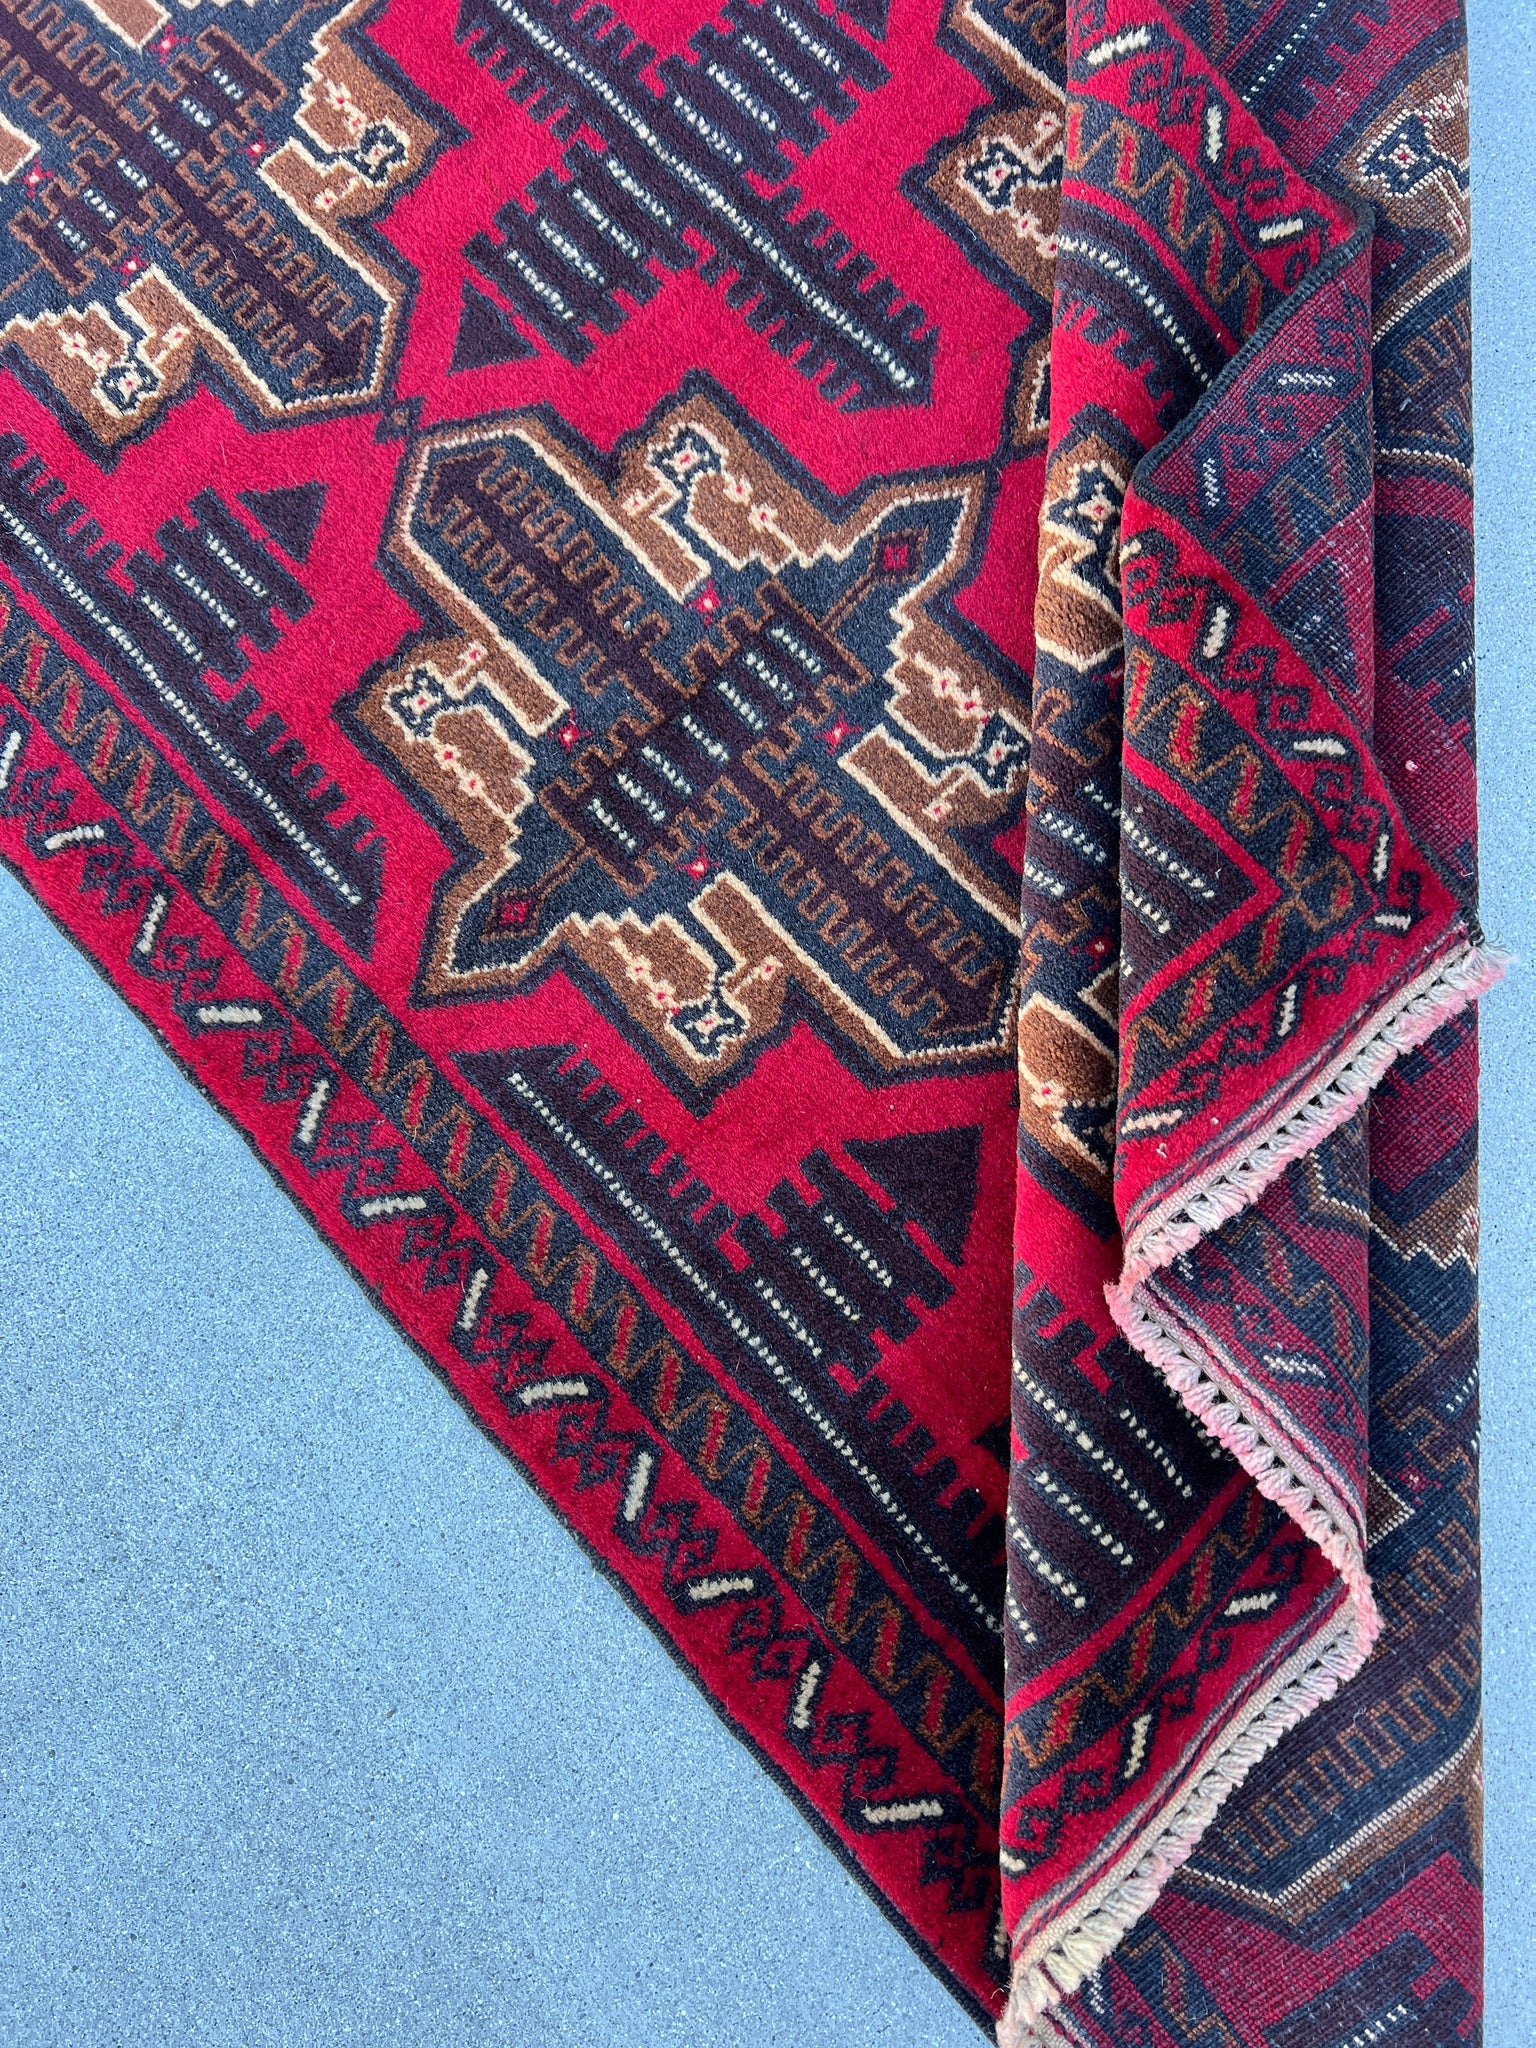 3x5 (100x180) Handmade Vintage Baluch Afghan Rug | Cherry Red Indigo Caramel Brown Ivory Cream Chocolate Brown | Hand Knotted Geometric Wool